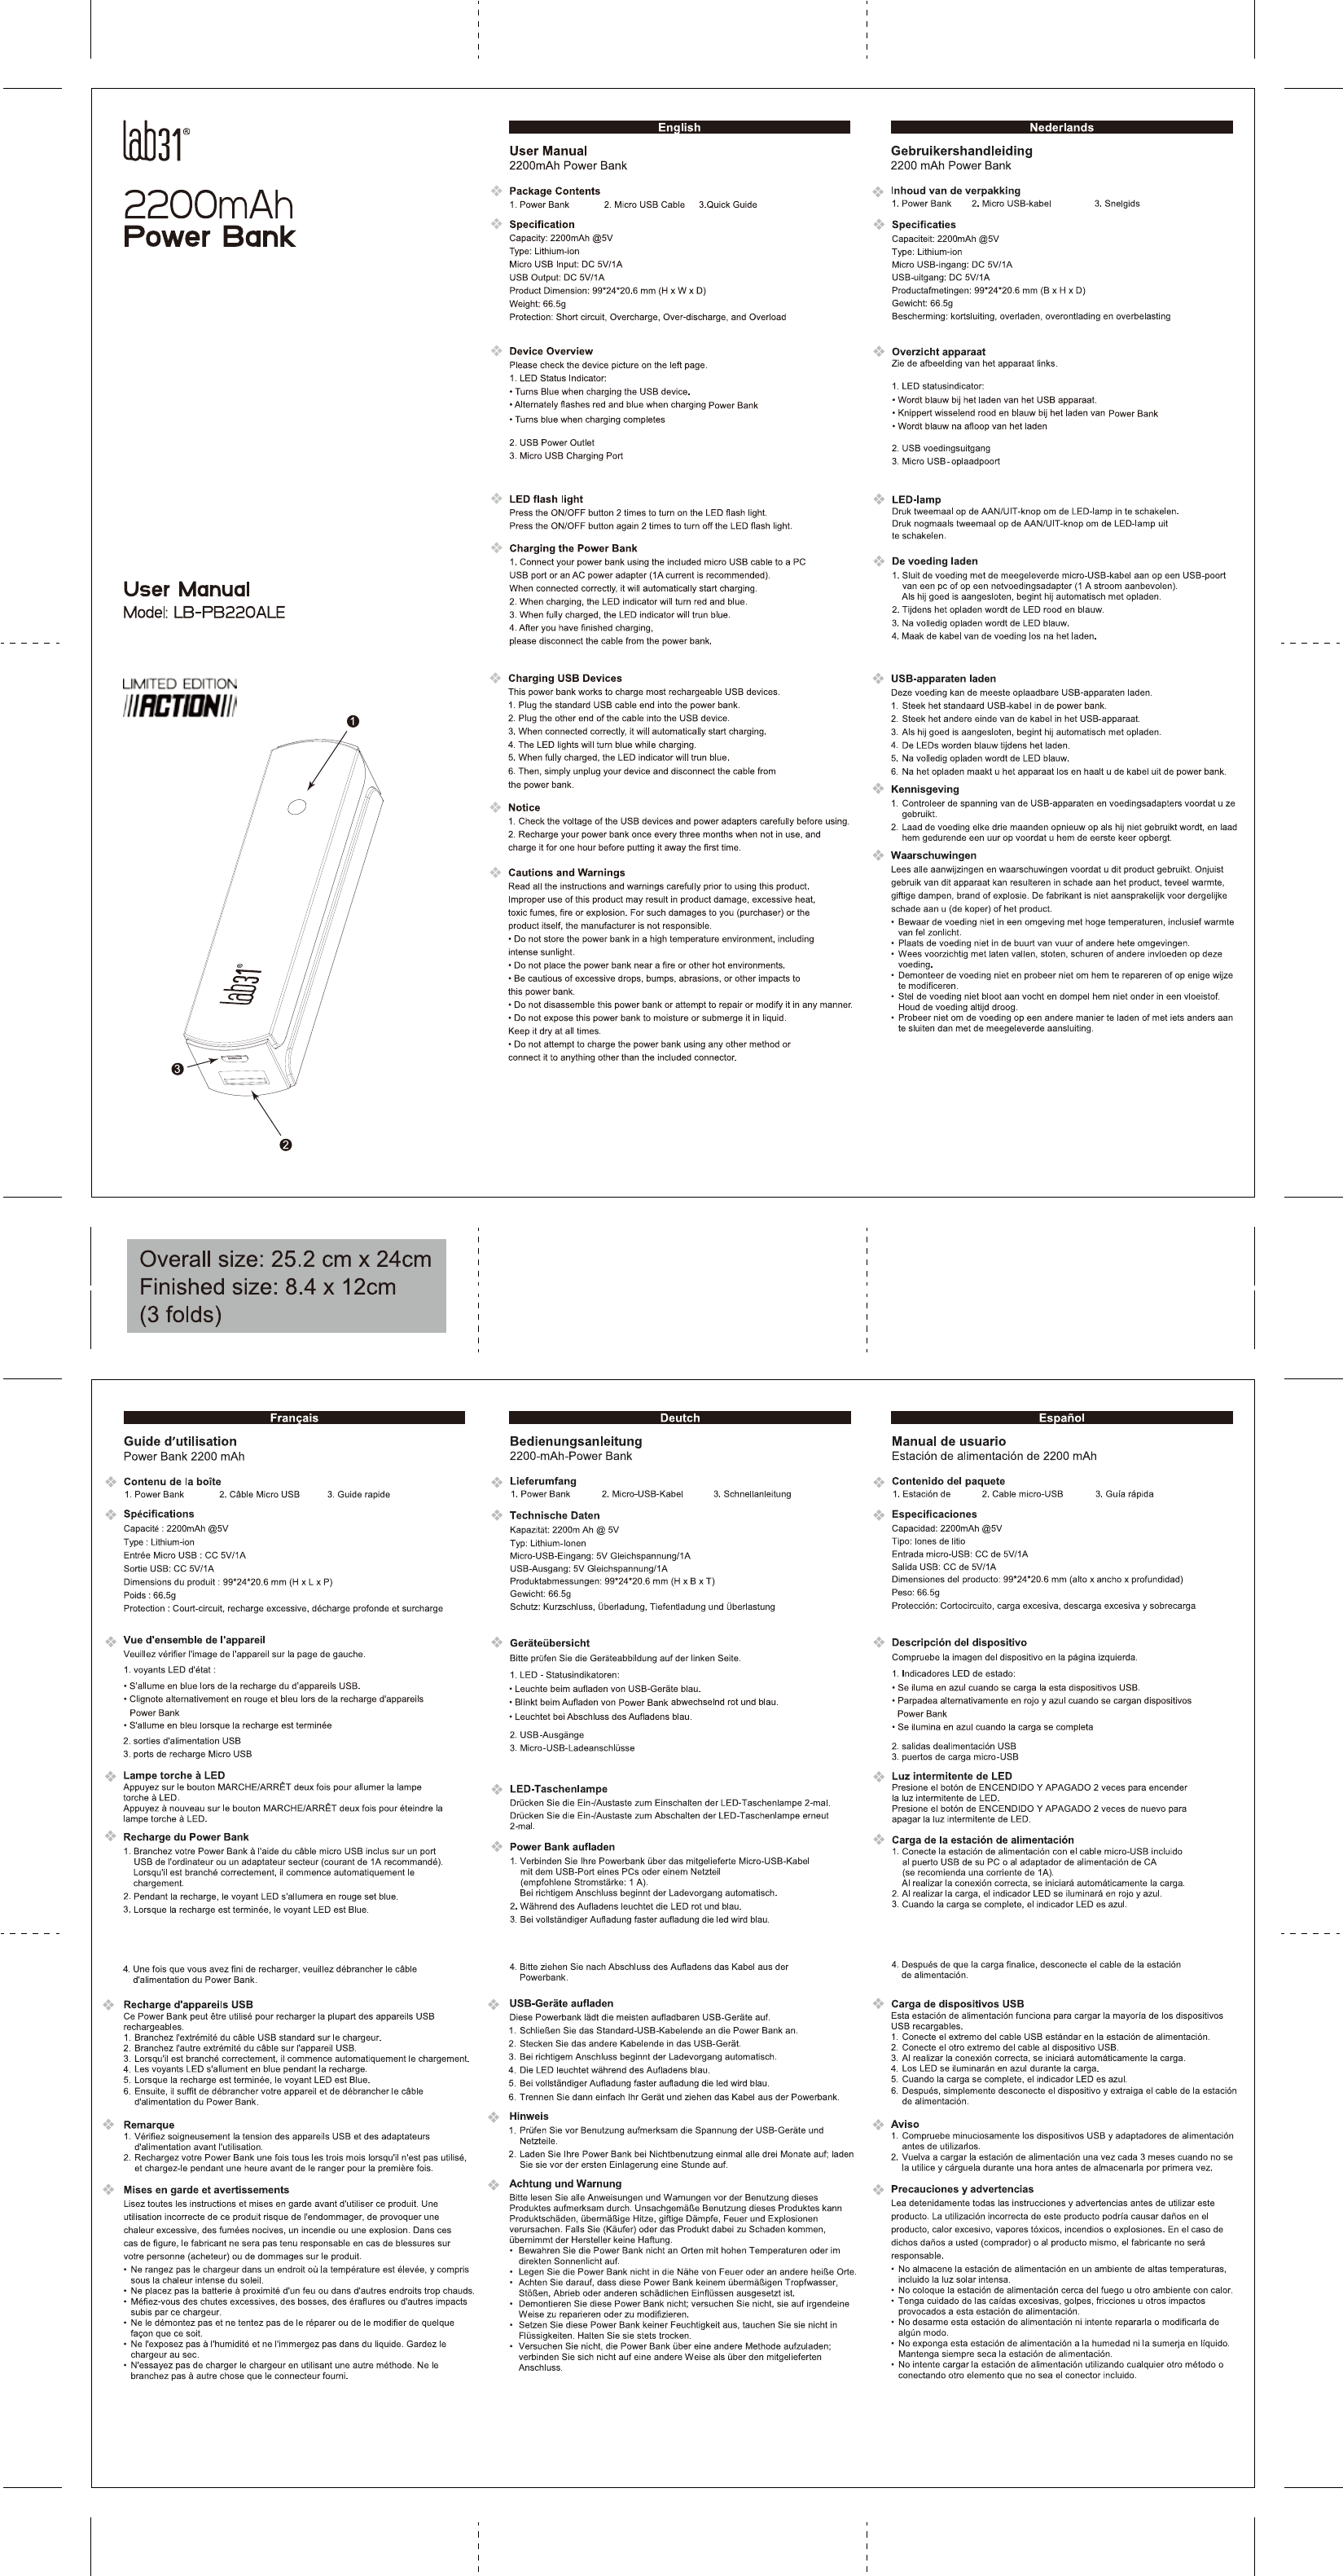 Handleiding Lab 31 LB-PB220 Powerbank 2200 (pagina 1 van 1) (Nederlands, Engels, Frans, Spaans)